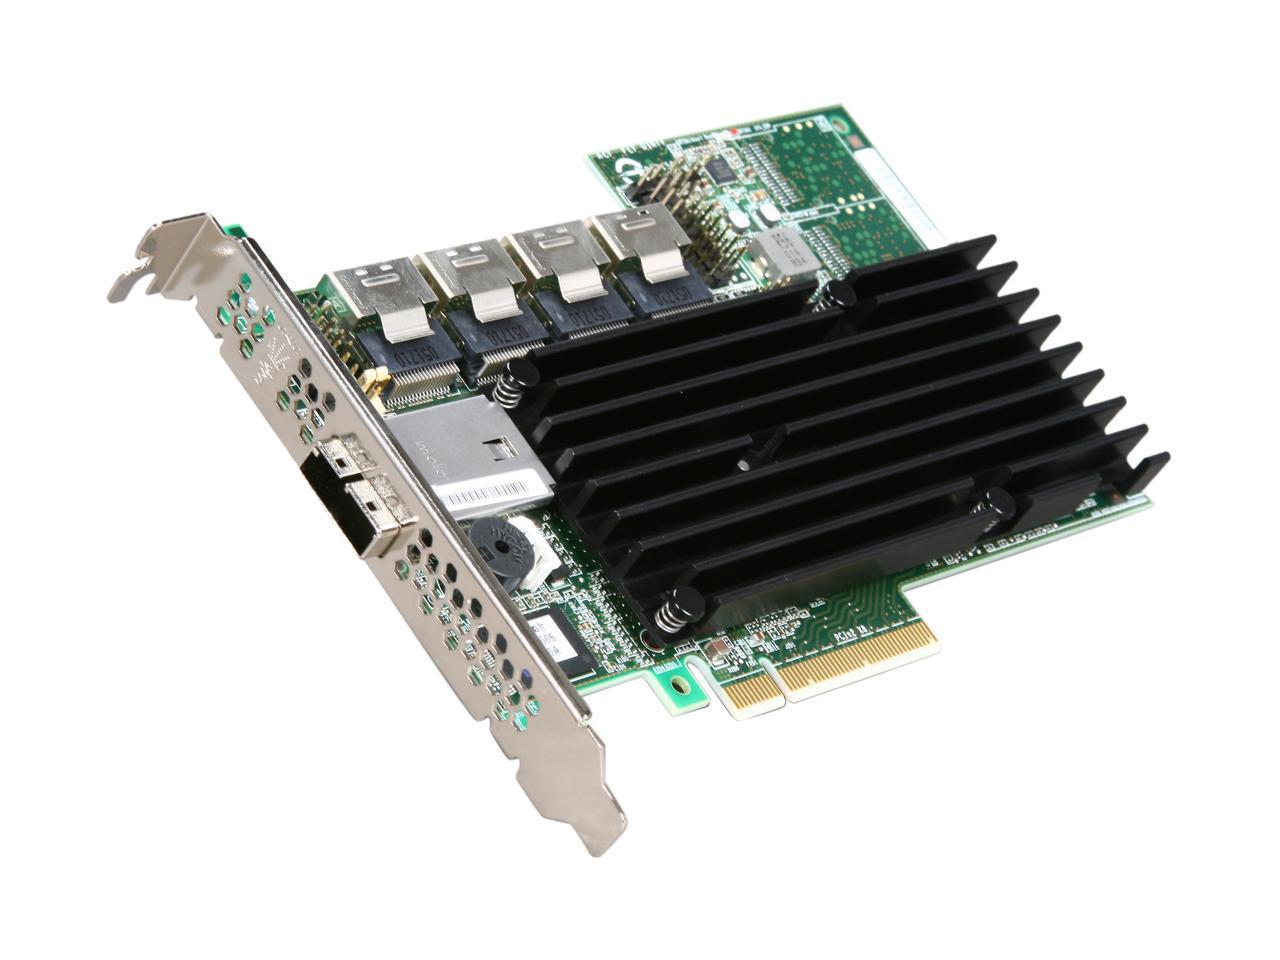 3ware 9750-16i4e  (LSI00252) 20 Ports SATA/SAS 6Gb/s PCIe 2.0 w/512 MB onboard memory Controller Card